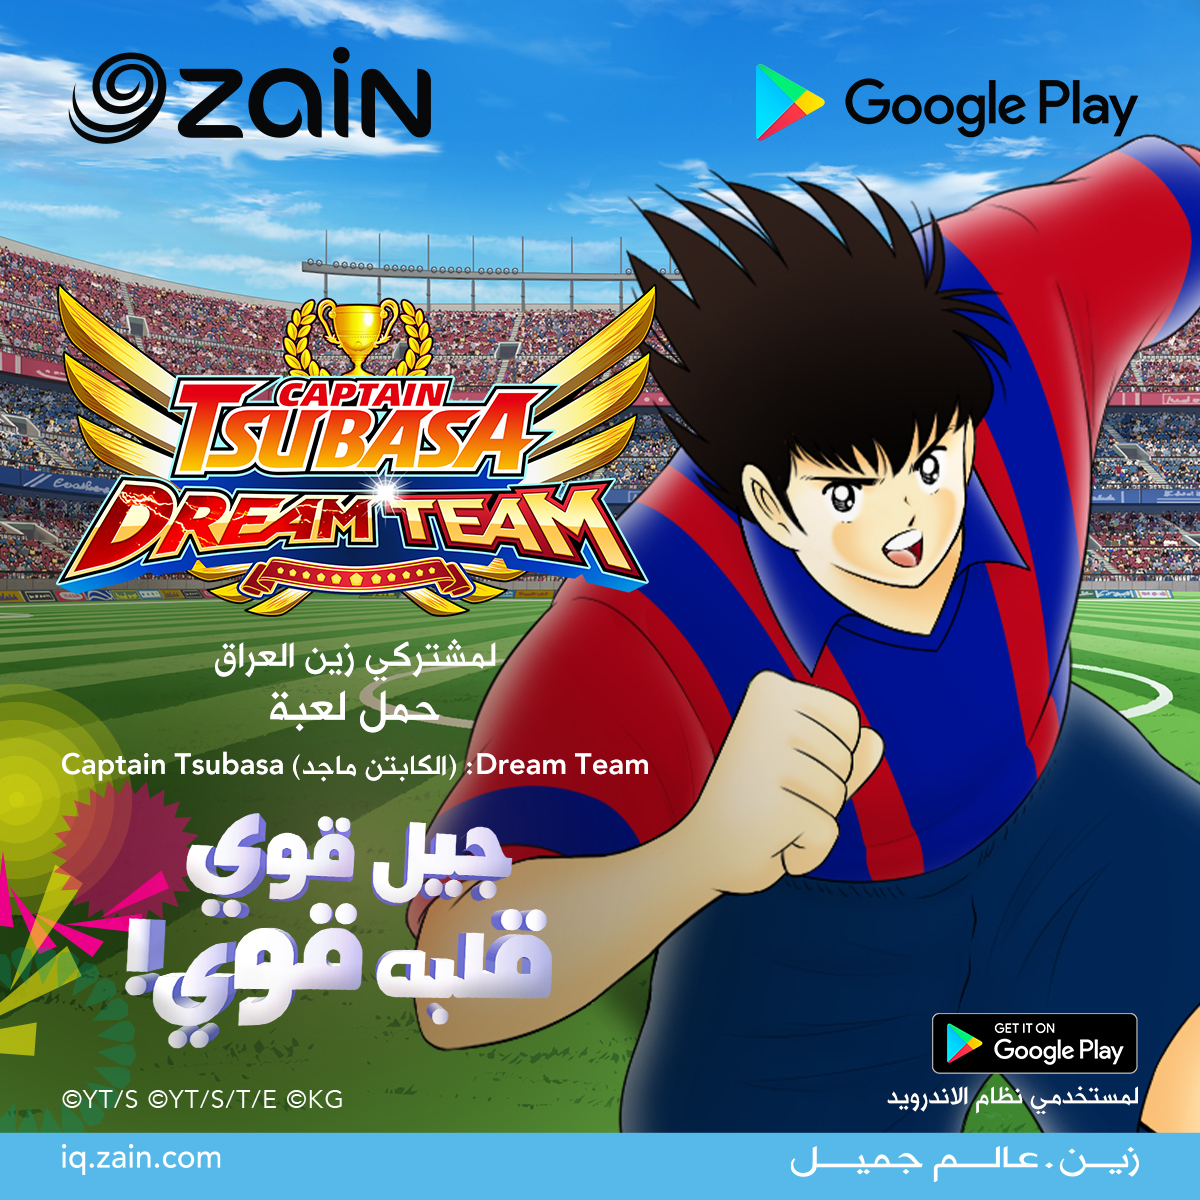 Captain Tsubasa: Dream Team” Celebrates Release in Iraq with Mobile Carrier  Zain Iraq and Special Campaign - AETOSWir...